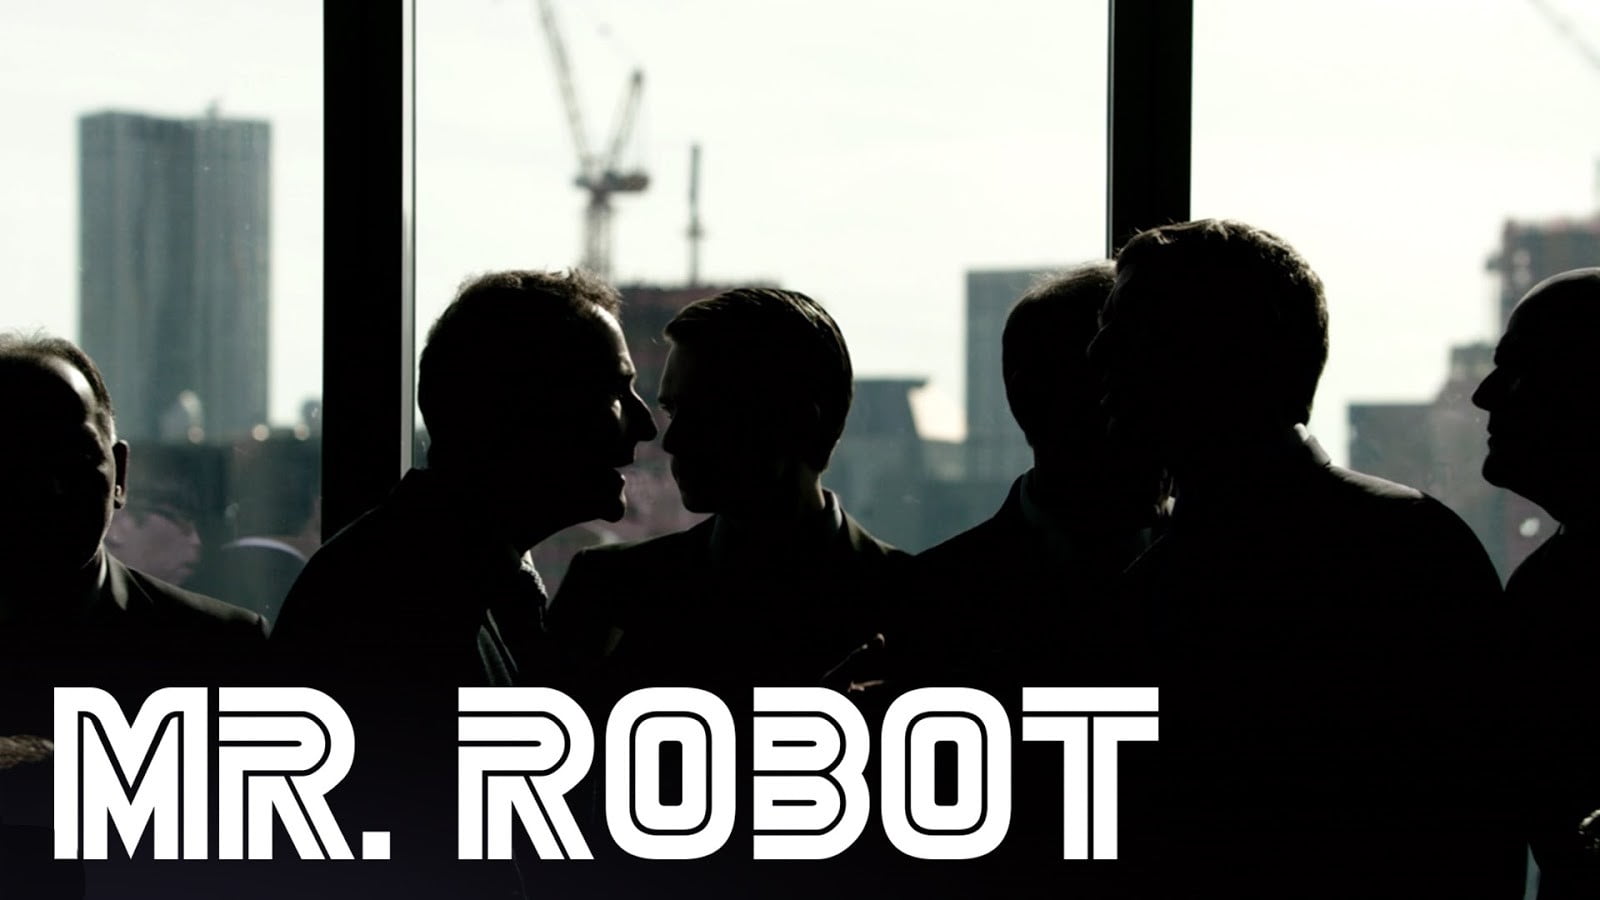 Mr. Robot poster, Mr. Robot, TV, hacking